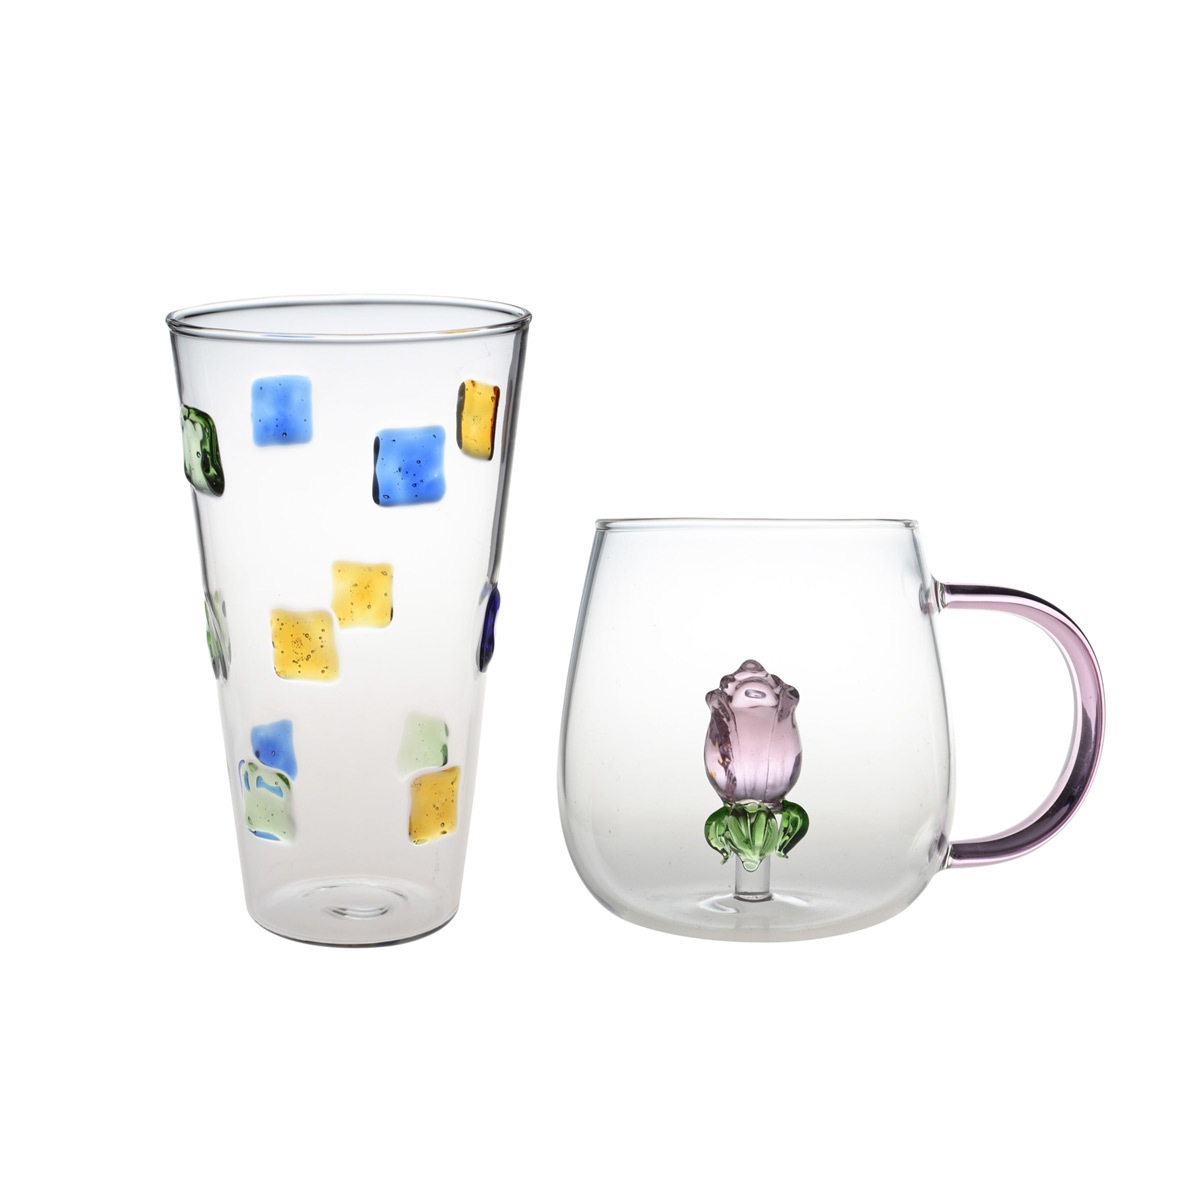 Single Wall Mugs, Cups & Glasses